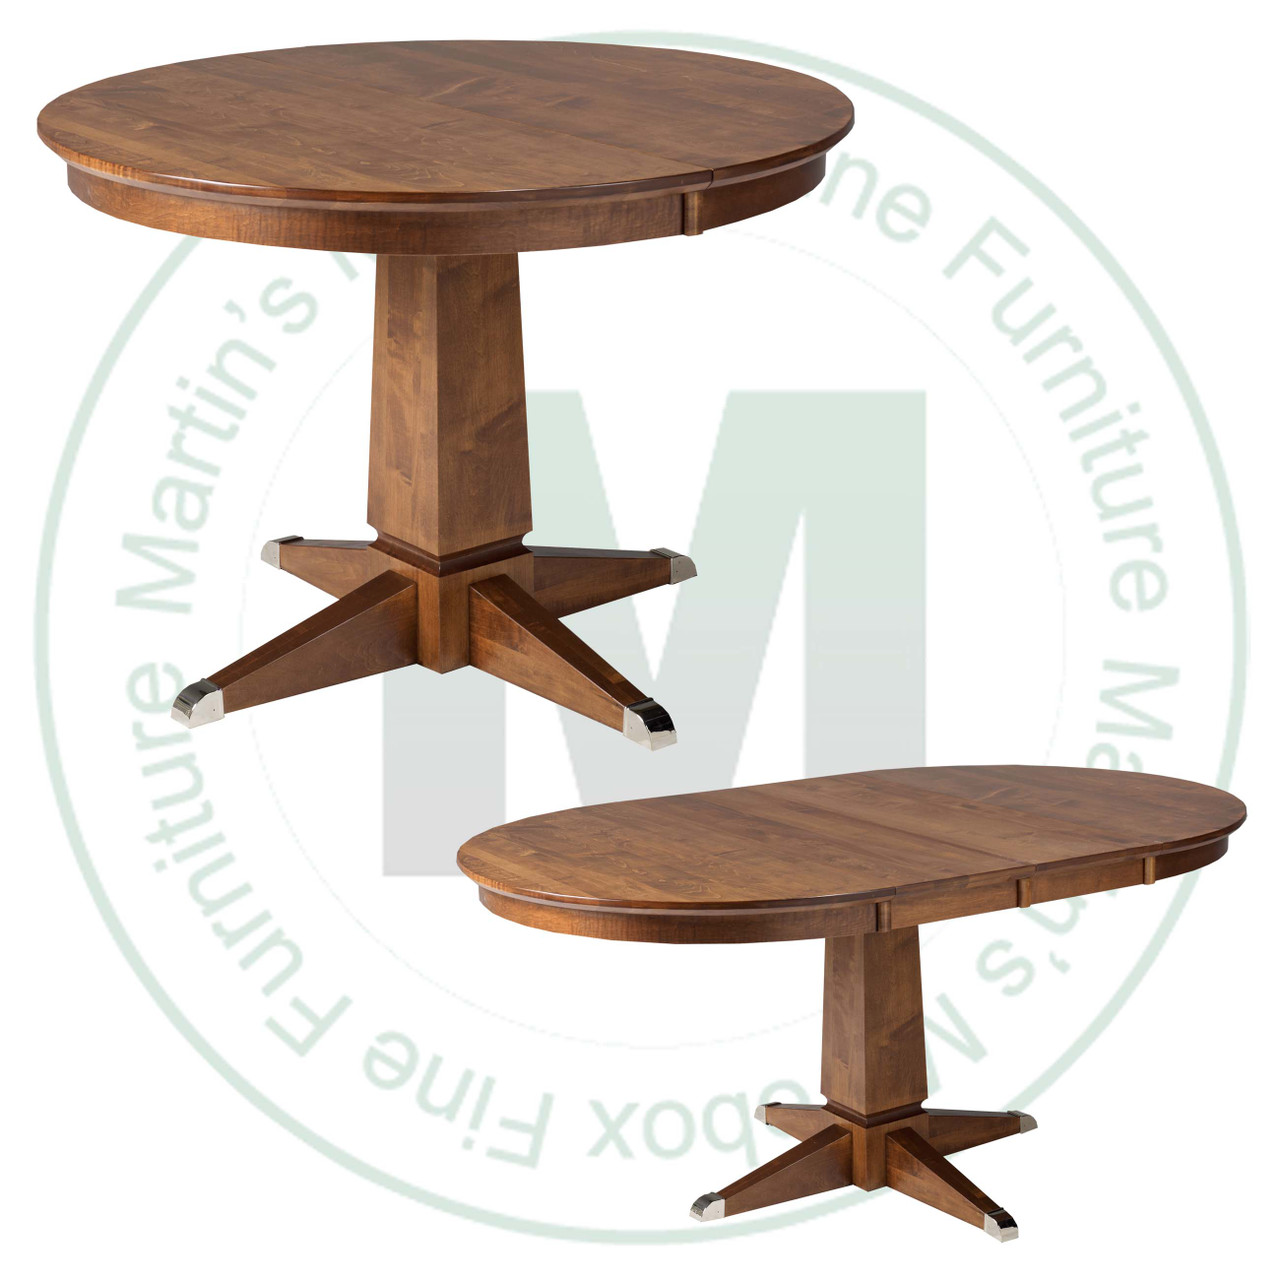 Maple Danish Single Pedestal Table 42''D x 48''W x 30''H With 1 - 12'' Leaf